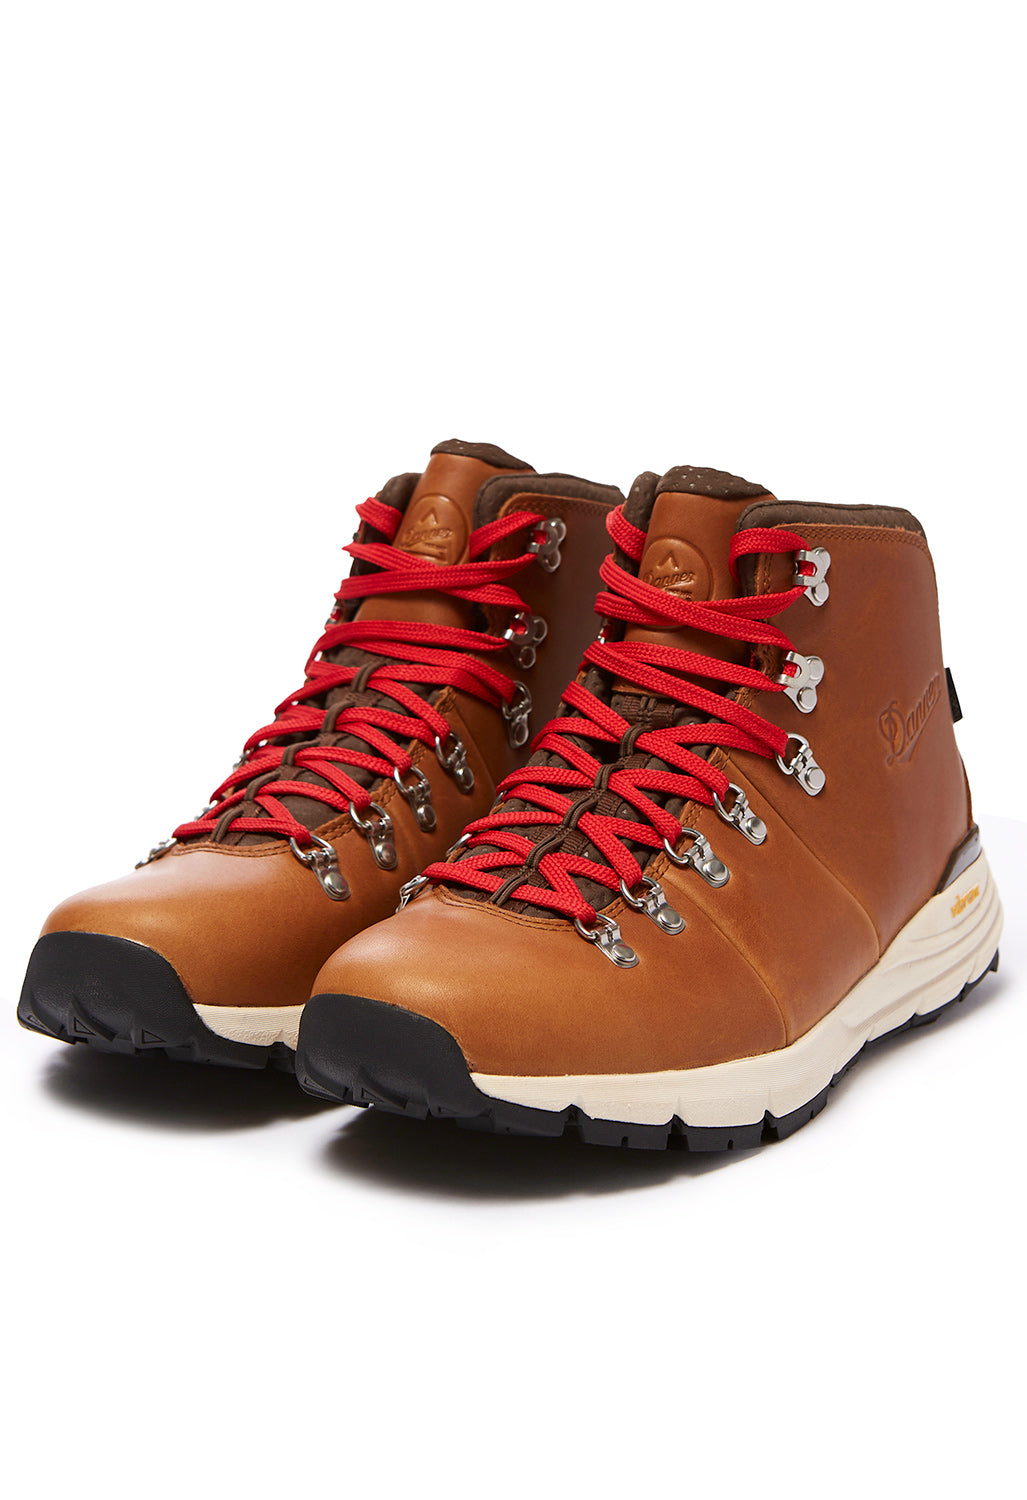 Danner Mountain 600 4.5" Men's Boots - Saddle Tan